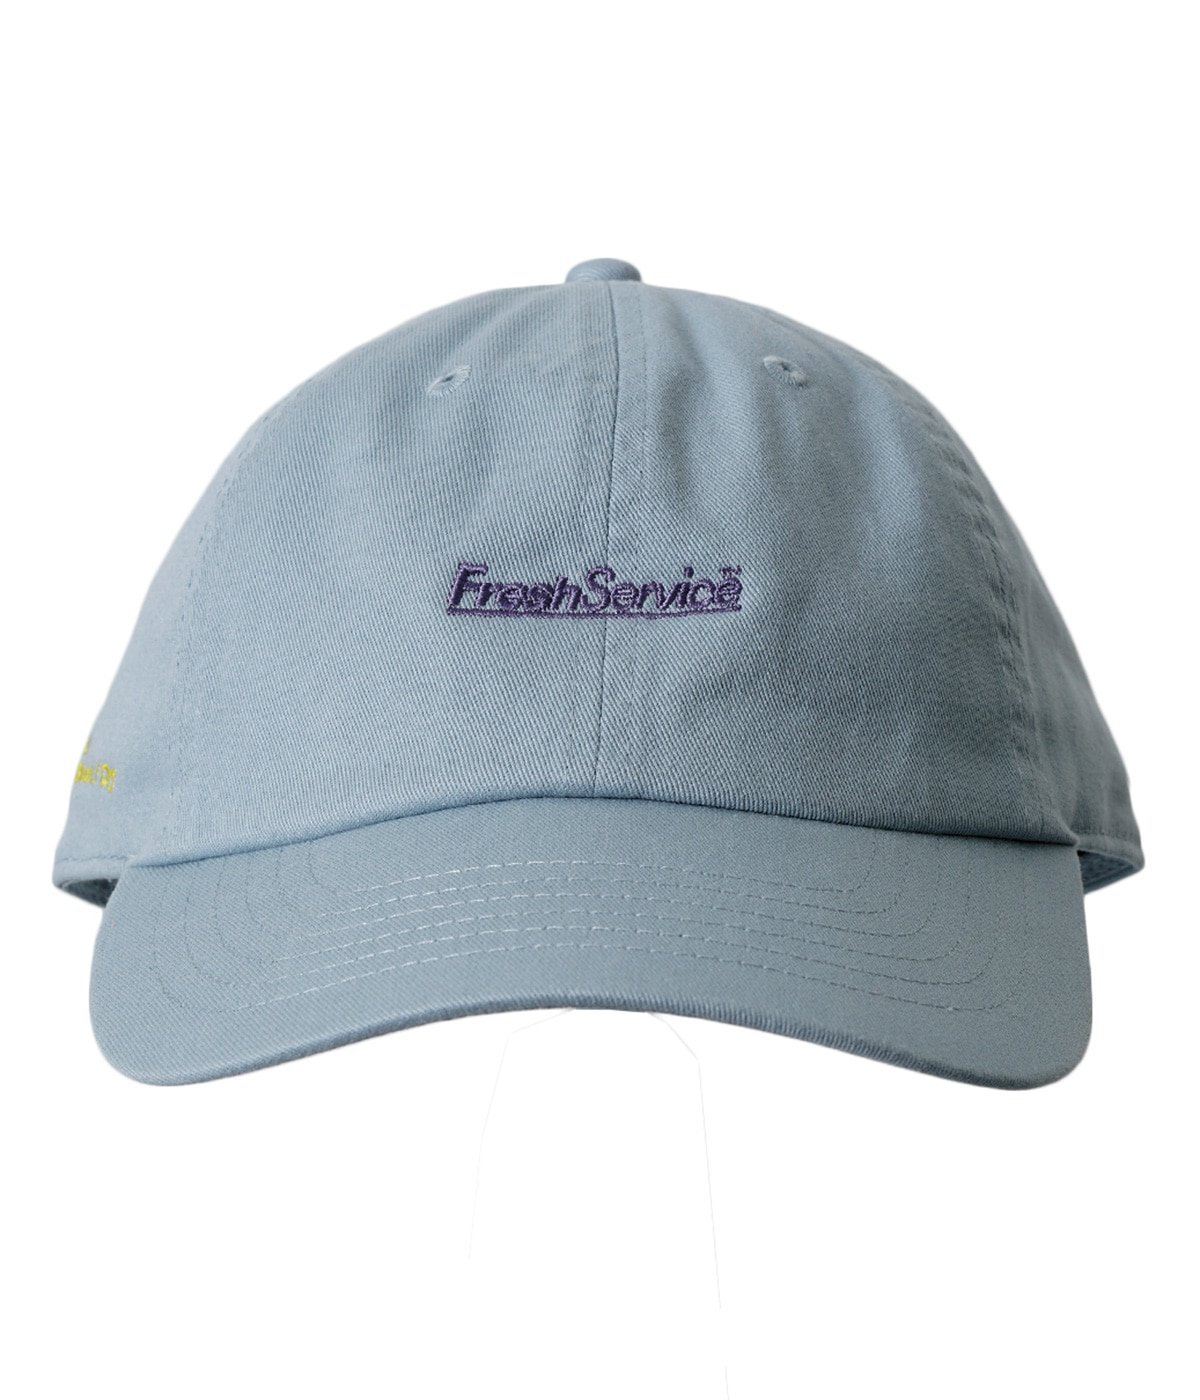 Corporate Cap | FreshService(フレッシュサービス) / 帽子 キャップ 